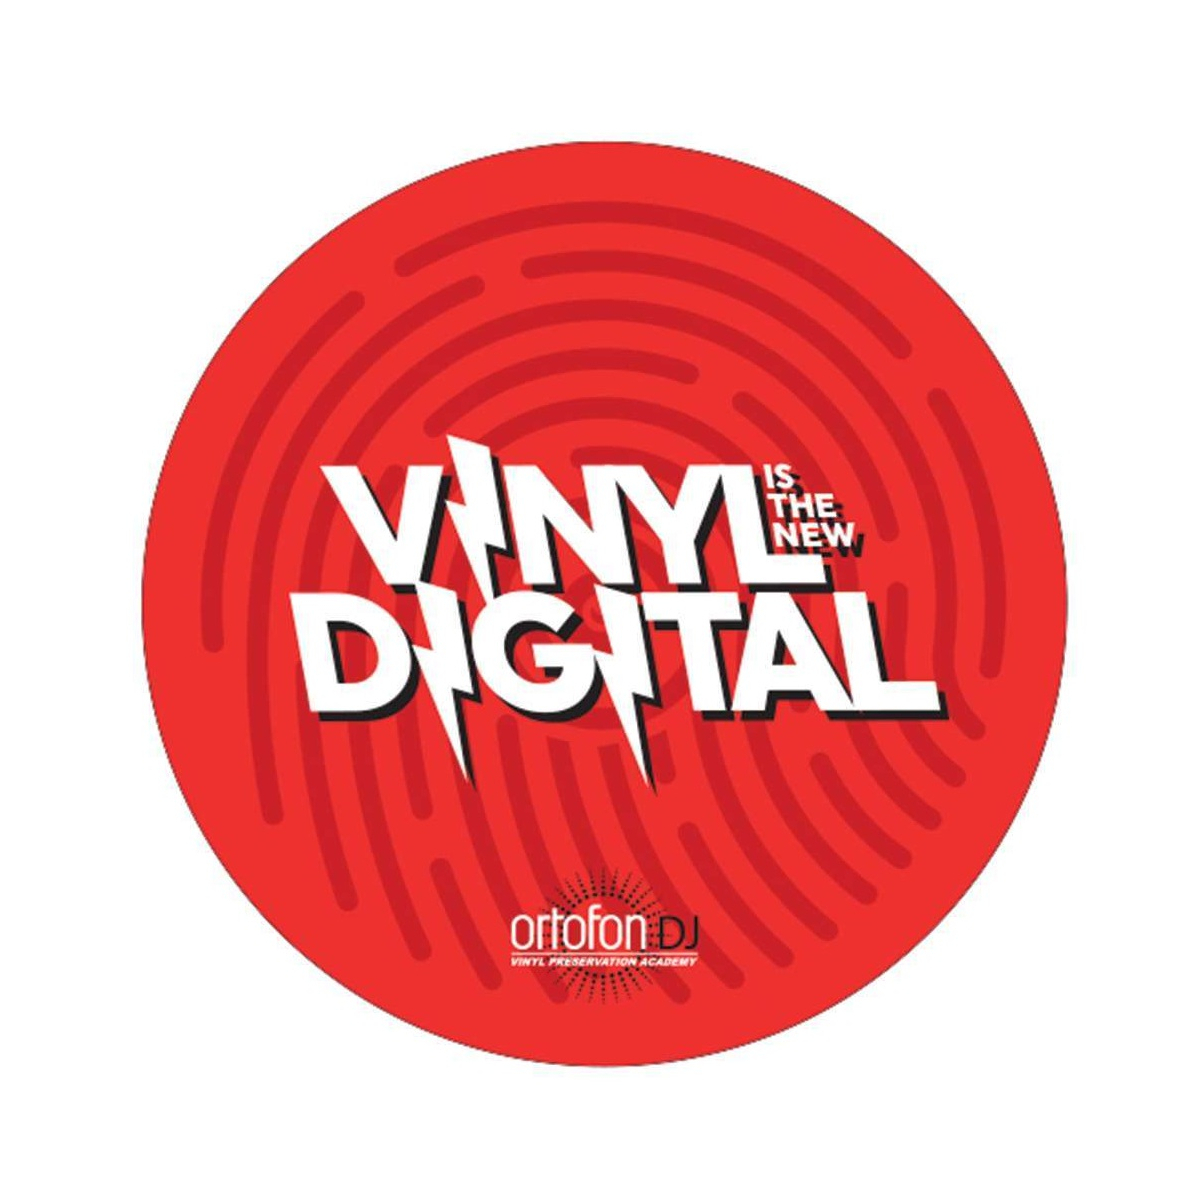 Feutrines platines vinyles - Ortofon DJ - SLIPMAT DIGITAL (La paire)